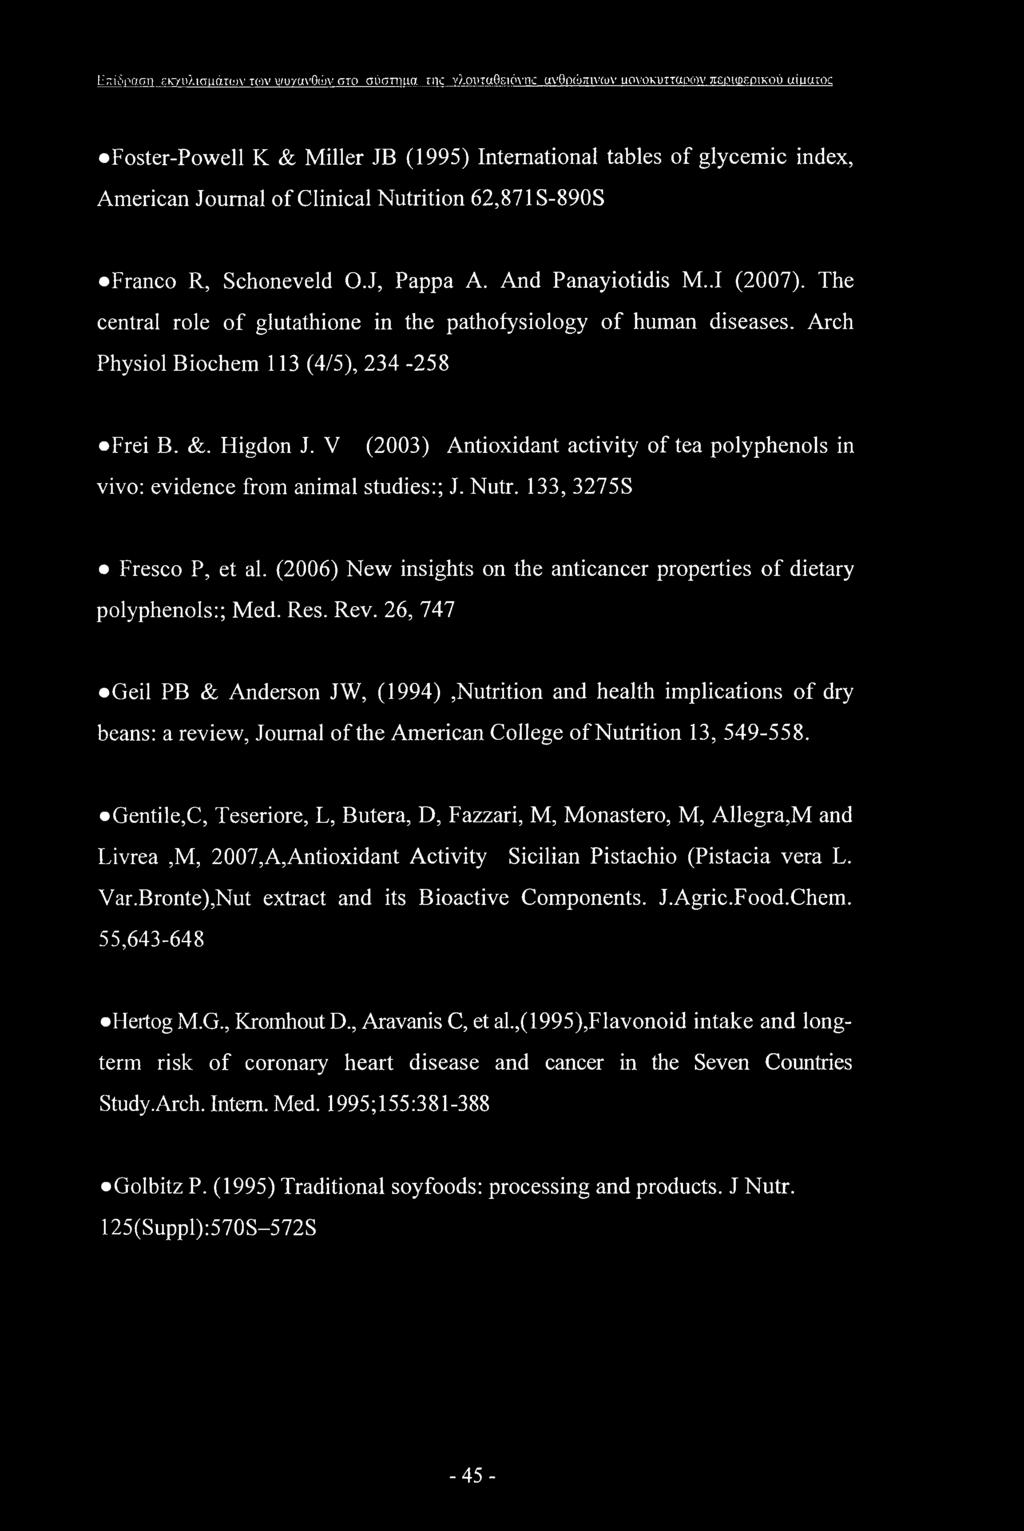 Arch Physiol Biochem 113 (4/5), 234-258 Frei B. &. Higdon J. V (2003) Antioxidant activity of tea polyphenols in vivo: evidence from animal studies:; J. Nutr. 133, 3275S Fresco P, et al.